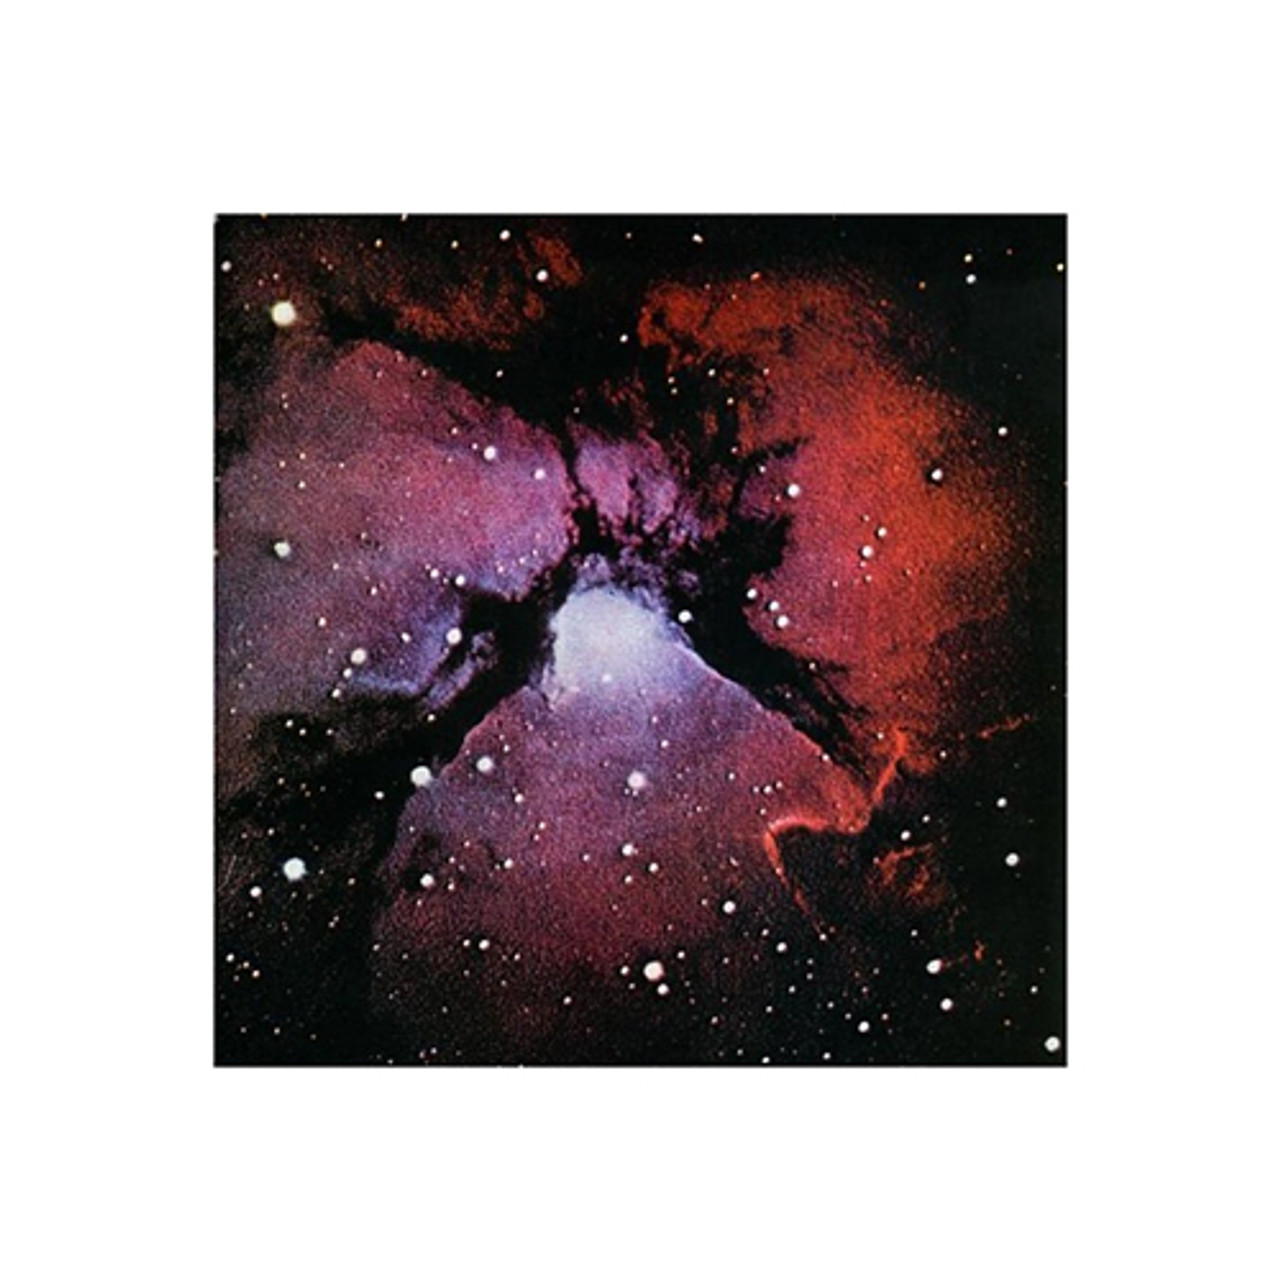 King Crimson - Islands (200g Import Vinyl LP) * * *